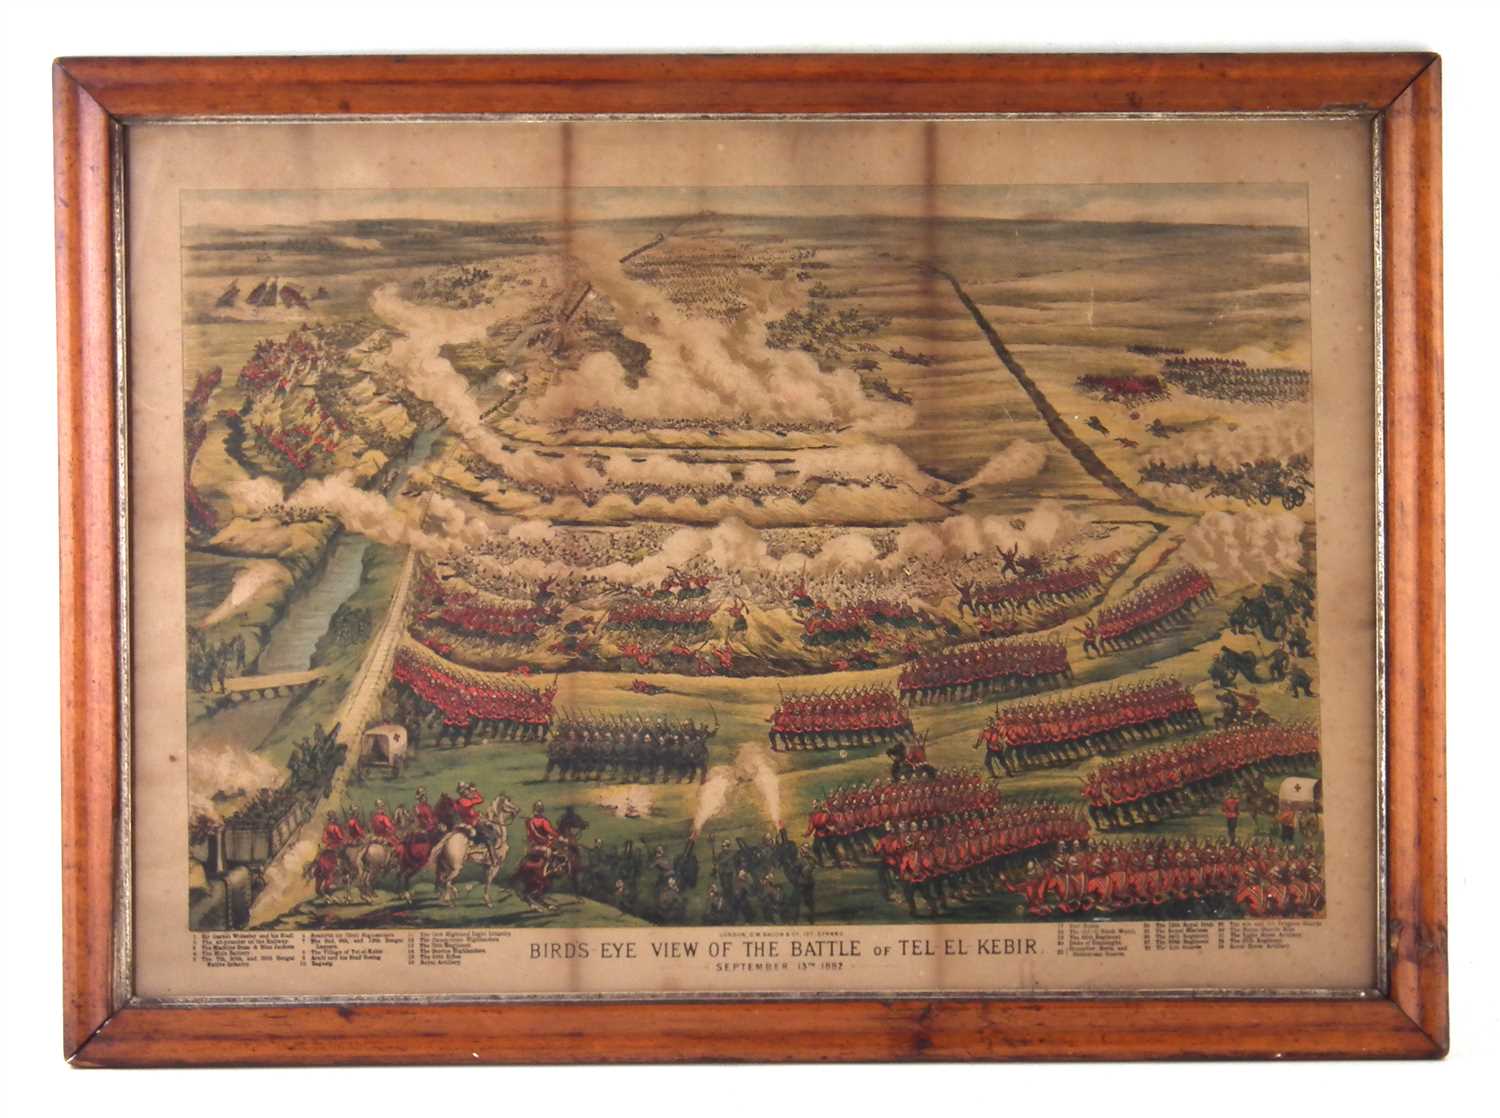 Lot 227 - Victorian print after G W Bacon 'Birds Eye View of the Battle of Tel-el-kebir'